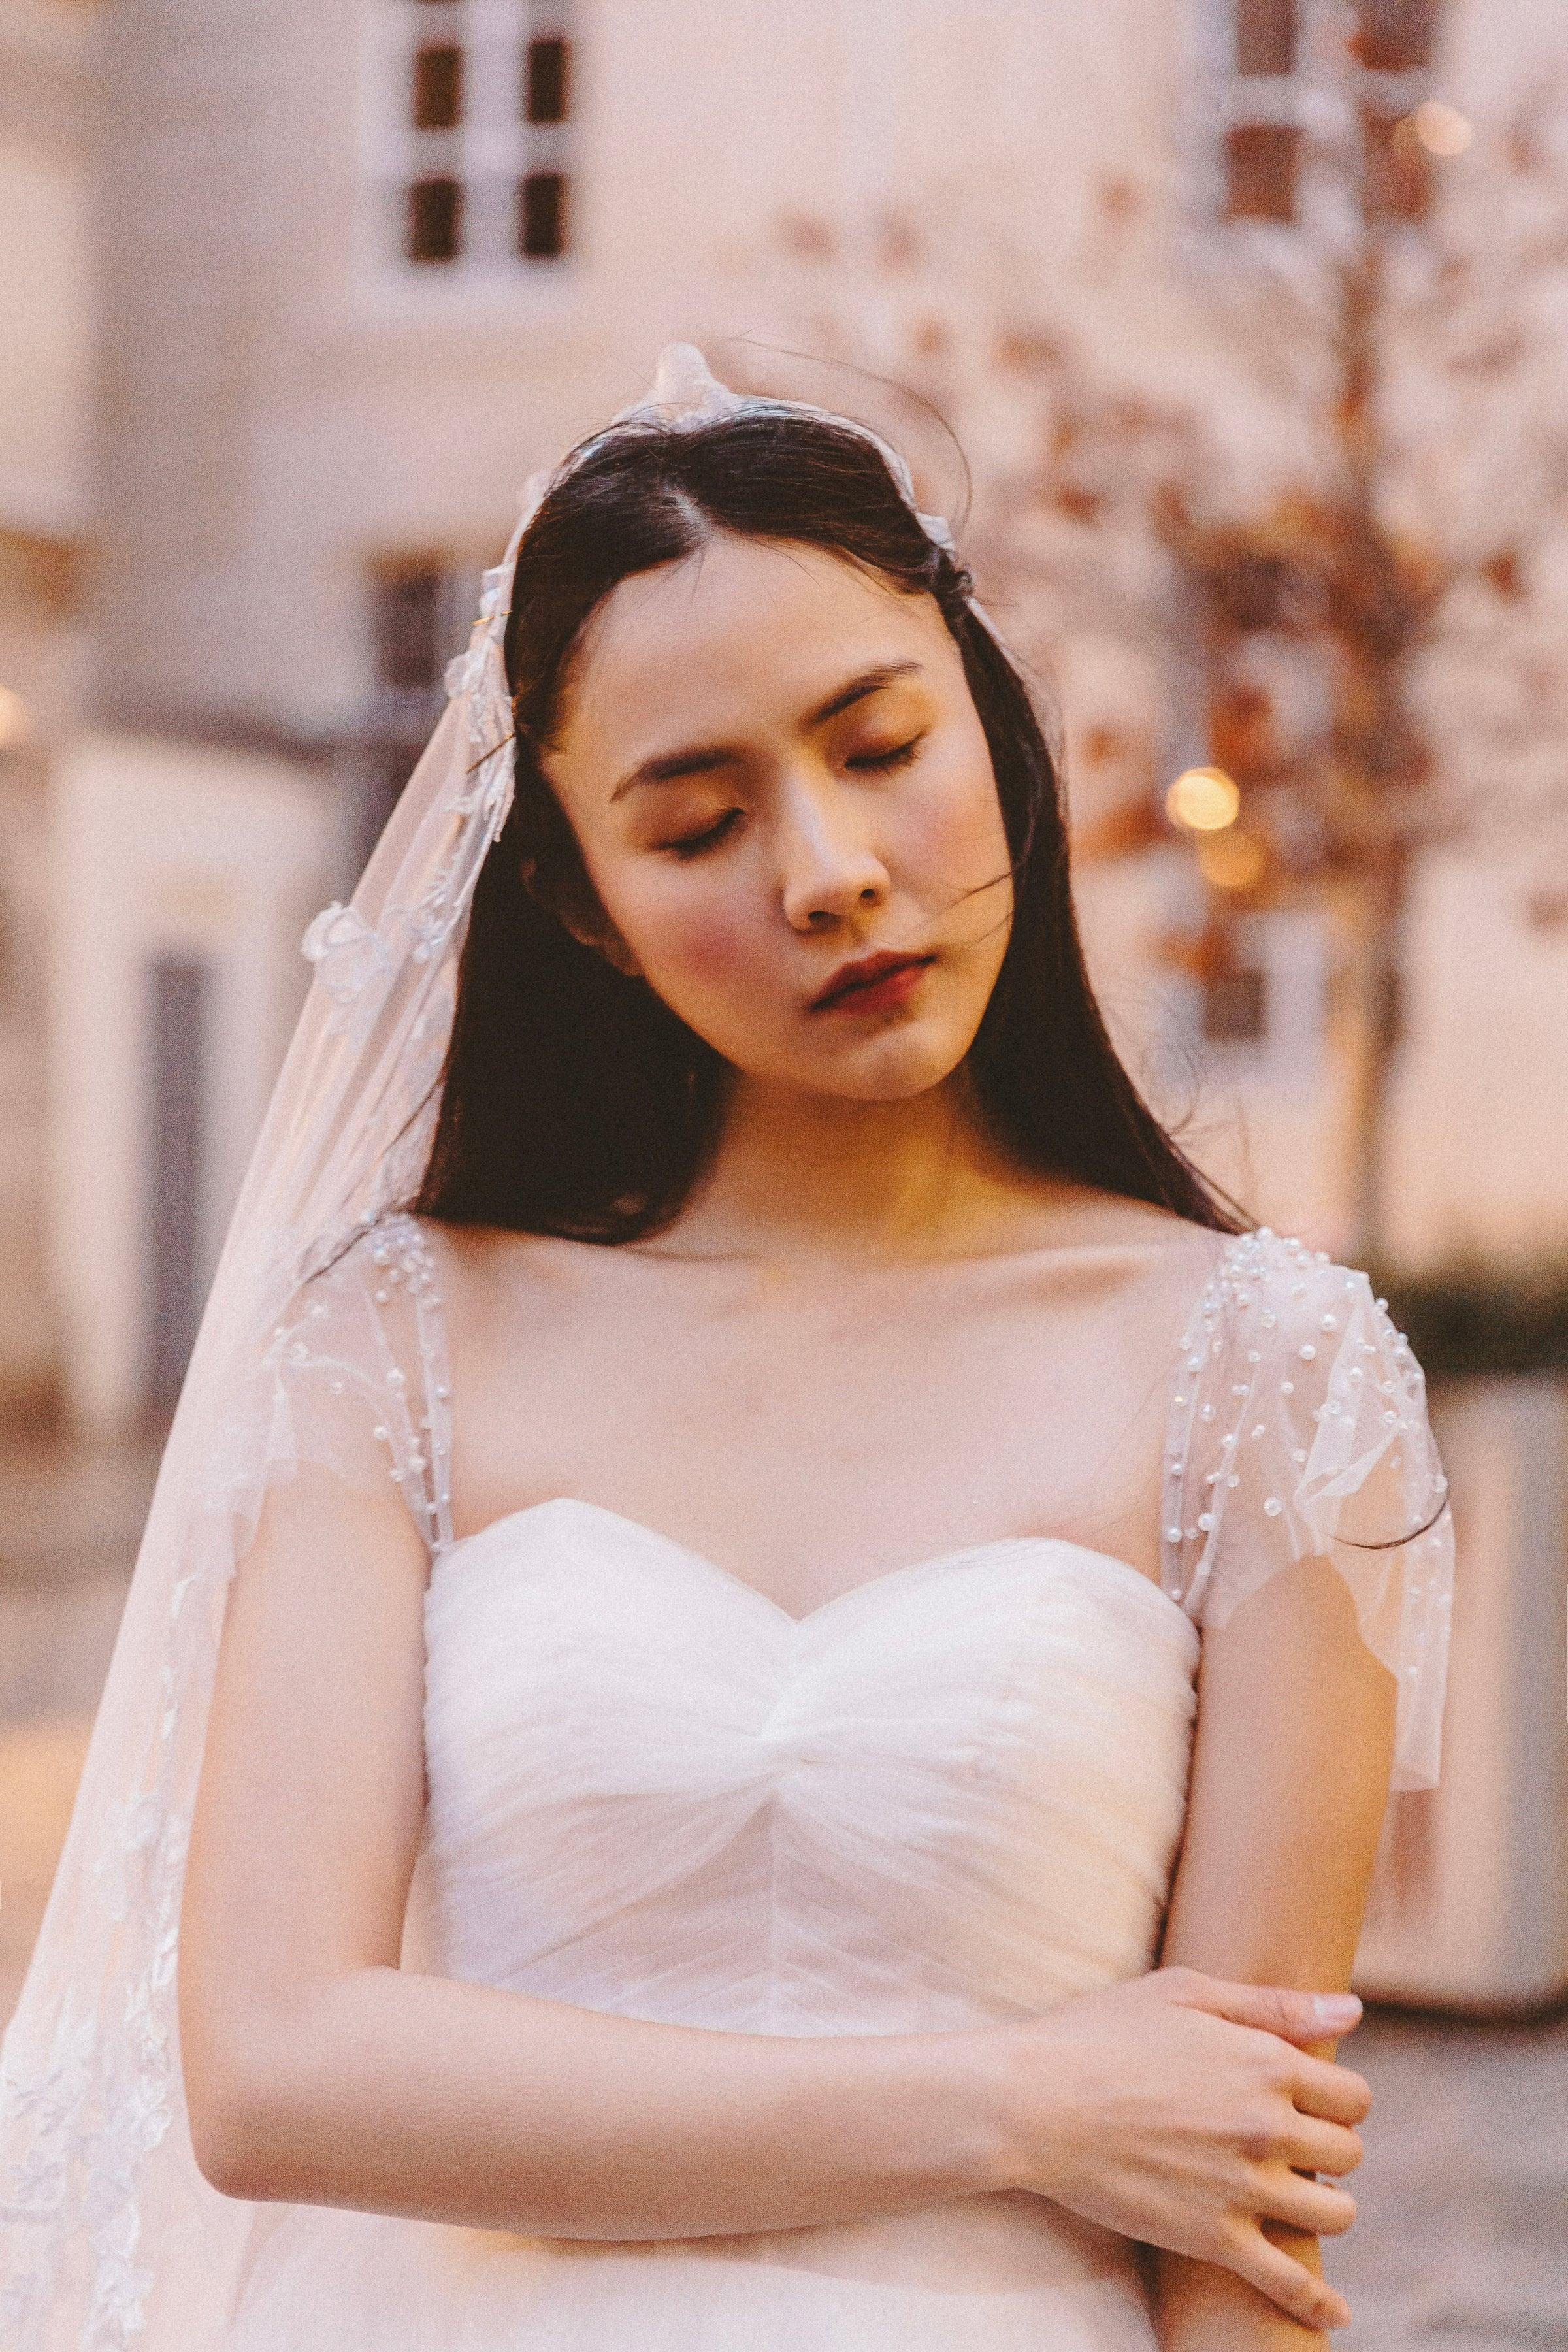 Sweetheart Neckline Wedding Dress | Dare and Dazzle